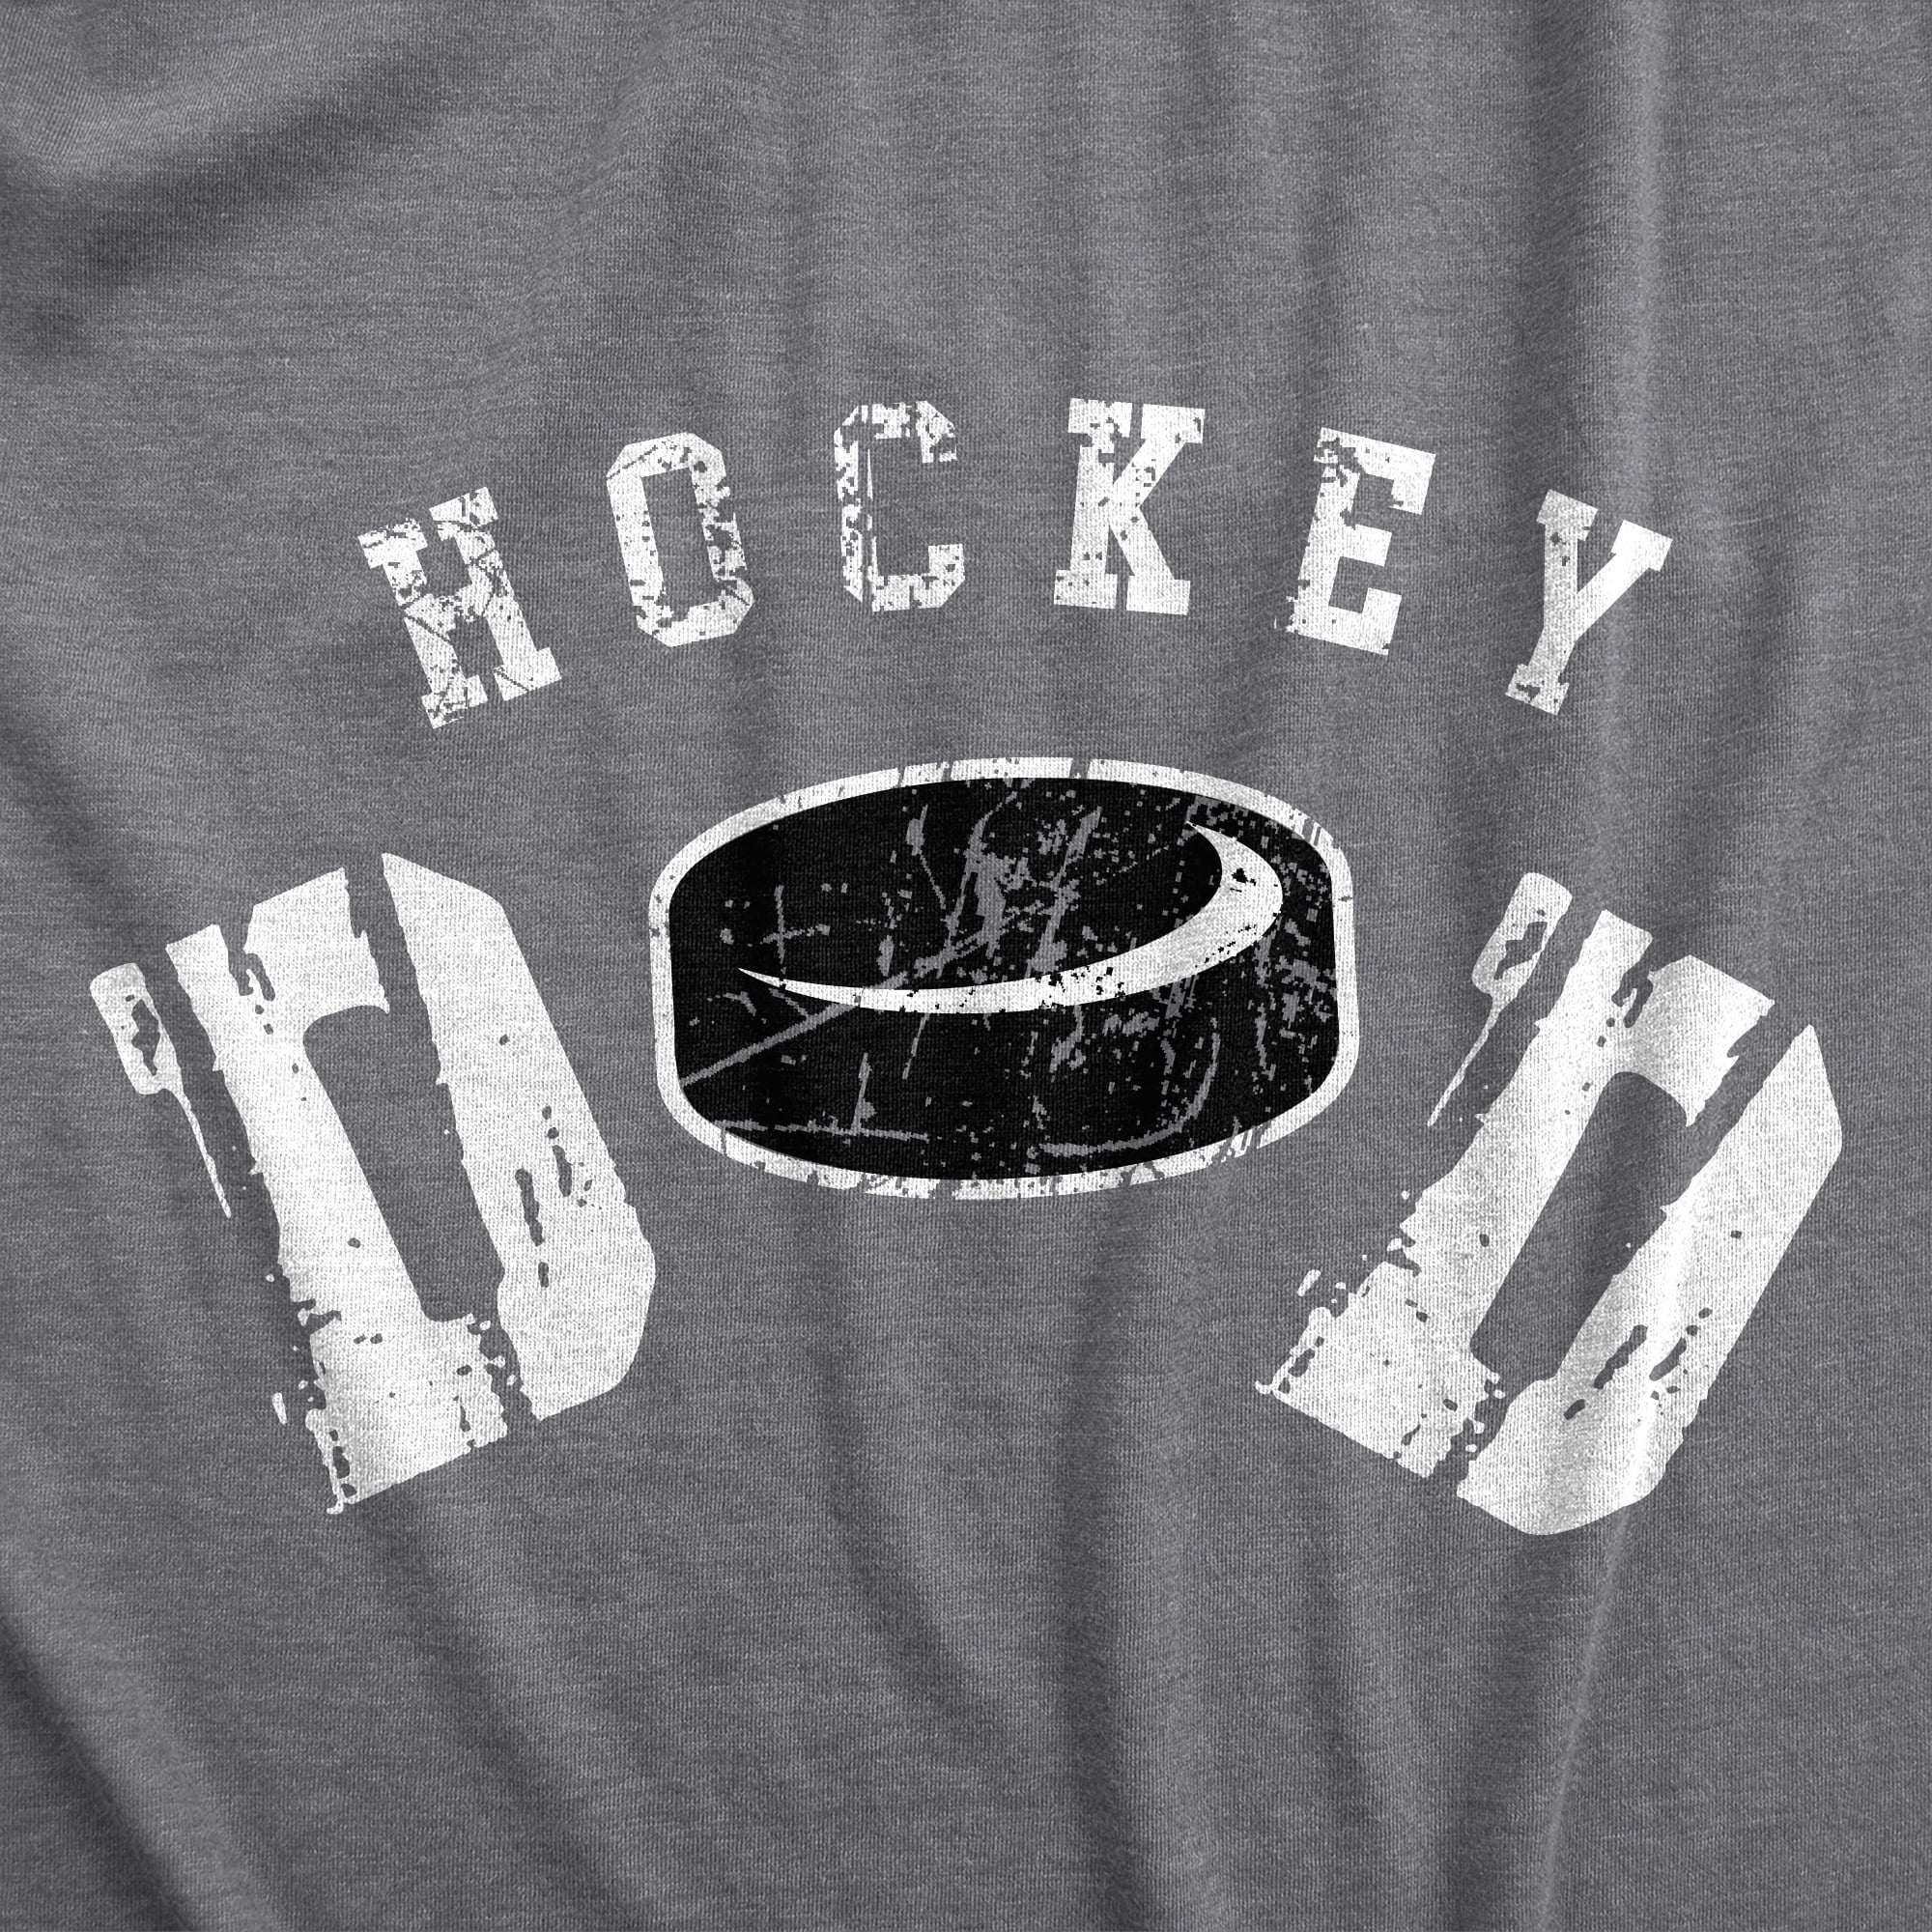 Field Hockey funny sports gift T-Shirt